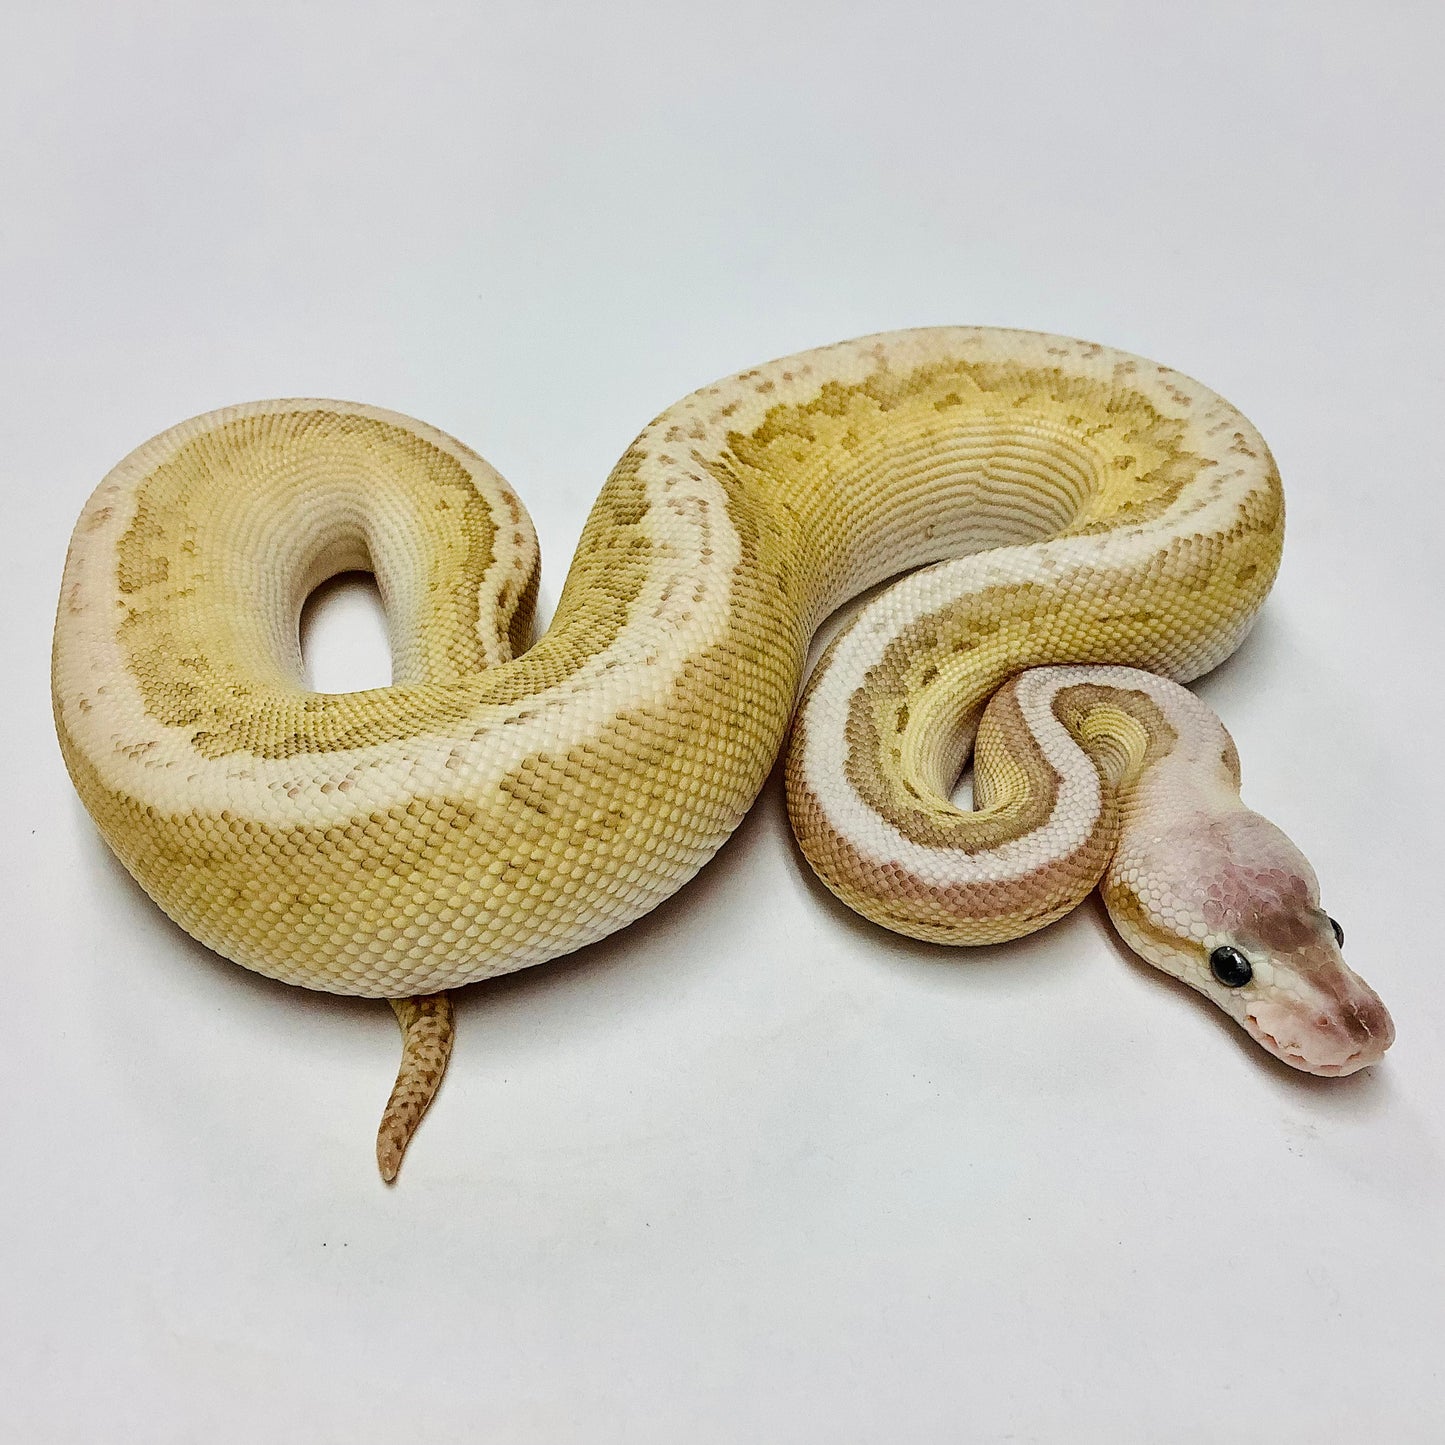 Super Pastel Black Pastel Lesser Pinstripe Cypress Ball Python - Male #2021M01